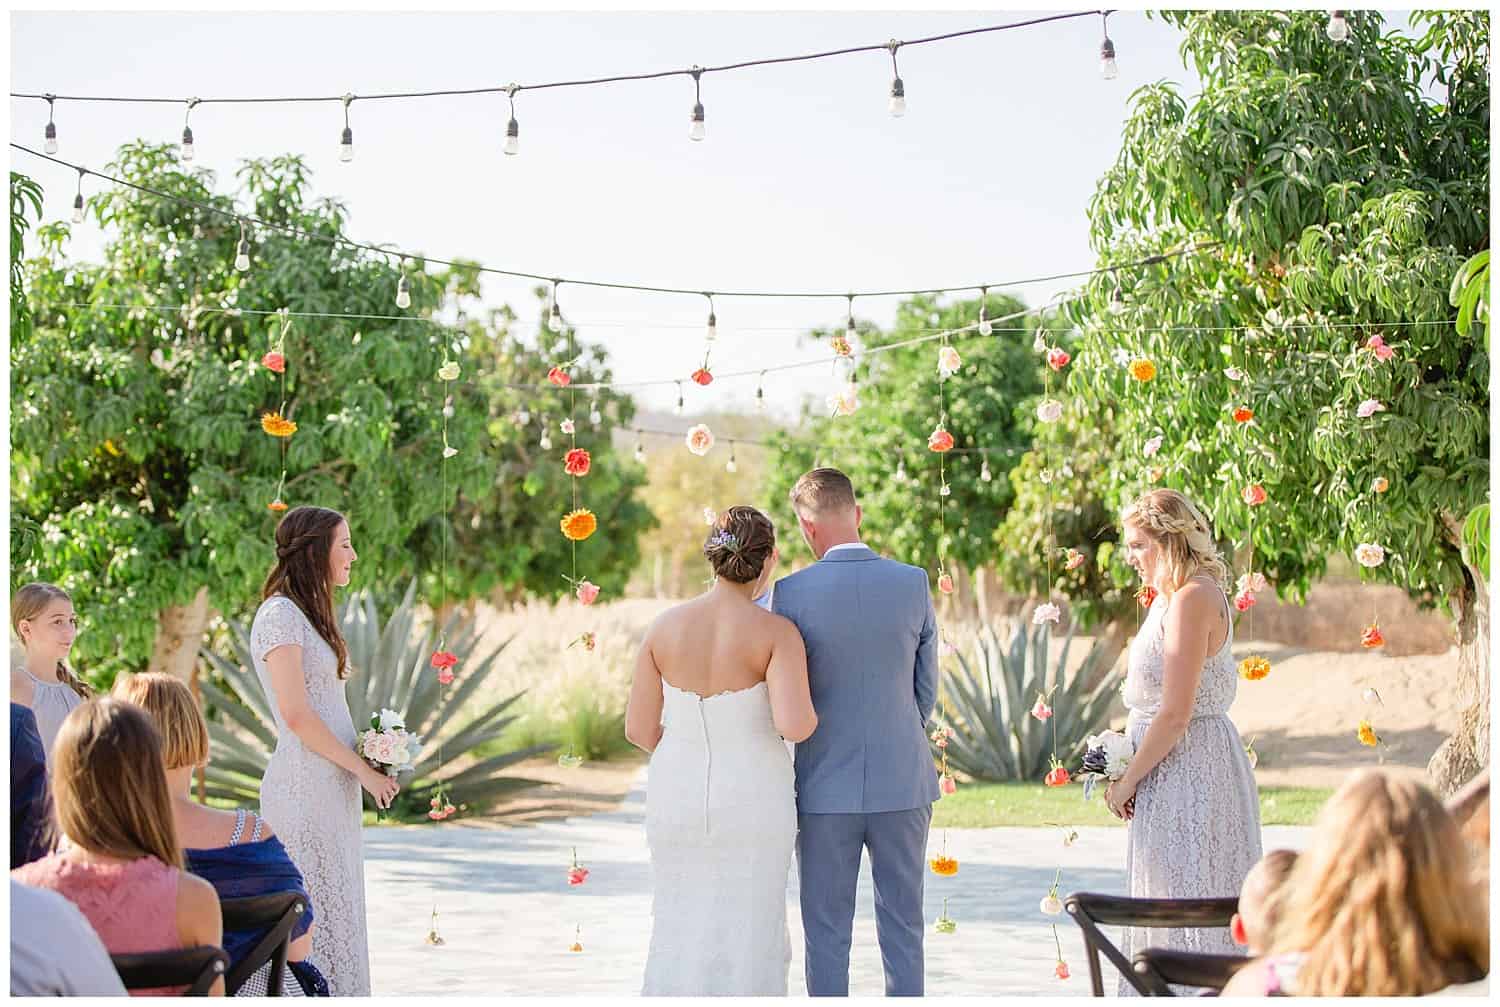 ?pp route=%2Fimage resize&path=%3DcGcq5yN0EDMfVmcjF0Xu92ckJXYoNWaS9VYyF2UfJXZoBXYyd2b09GaQ91ZulGZkV2df9mYhN0L0N3bw1SN3IDNtYTMvETMvcTMwIjf&width=768 - Becca and Matt's gorgeous farm wedding in Los Cabos